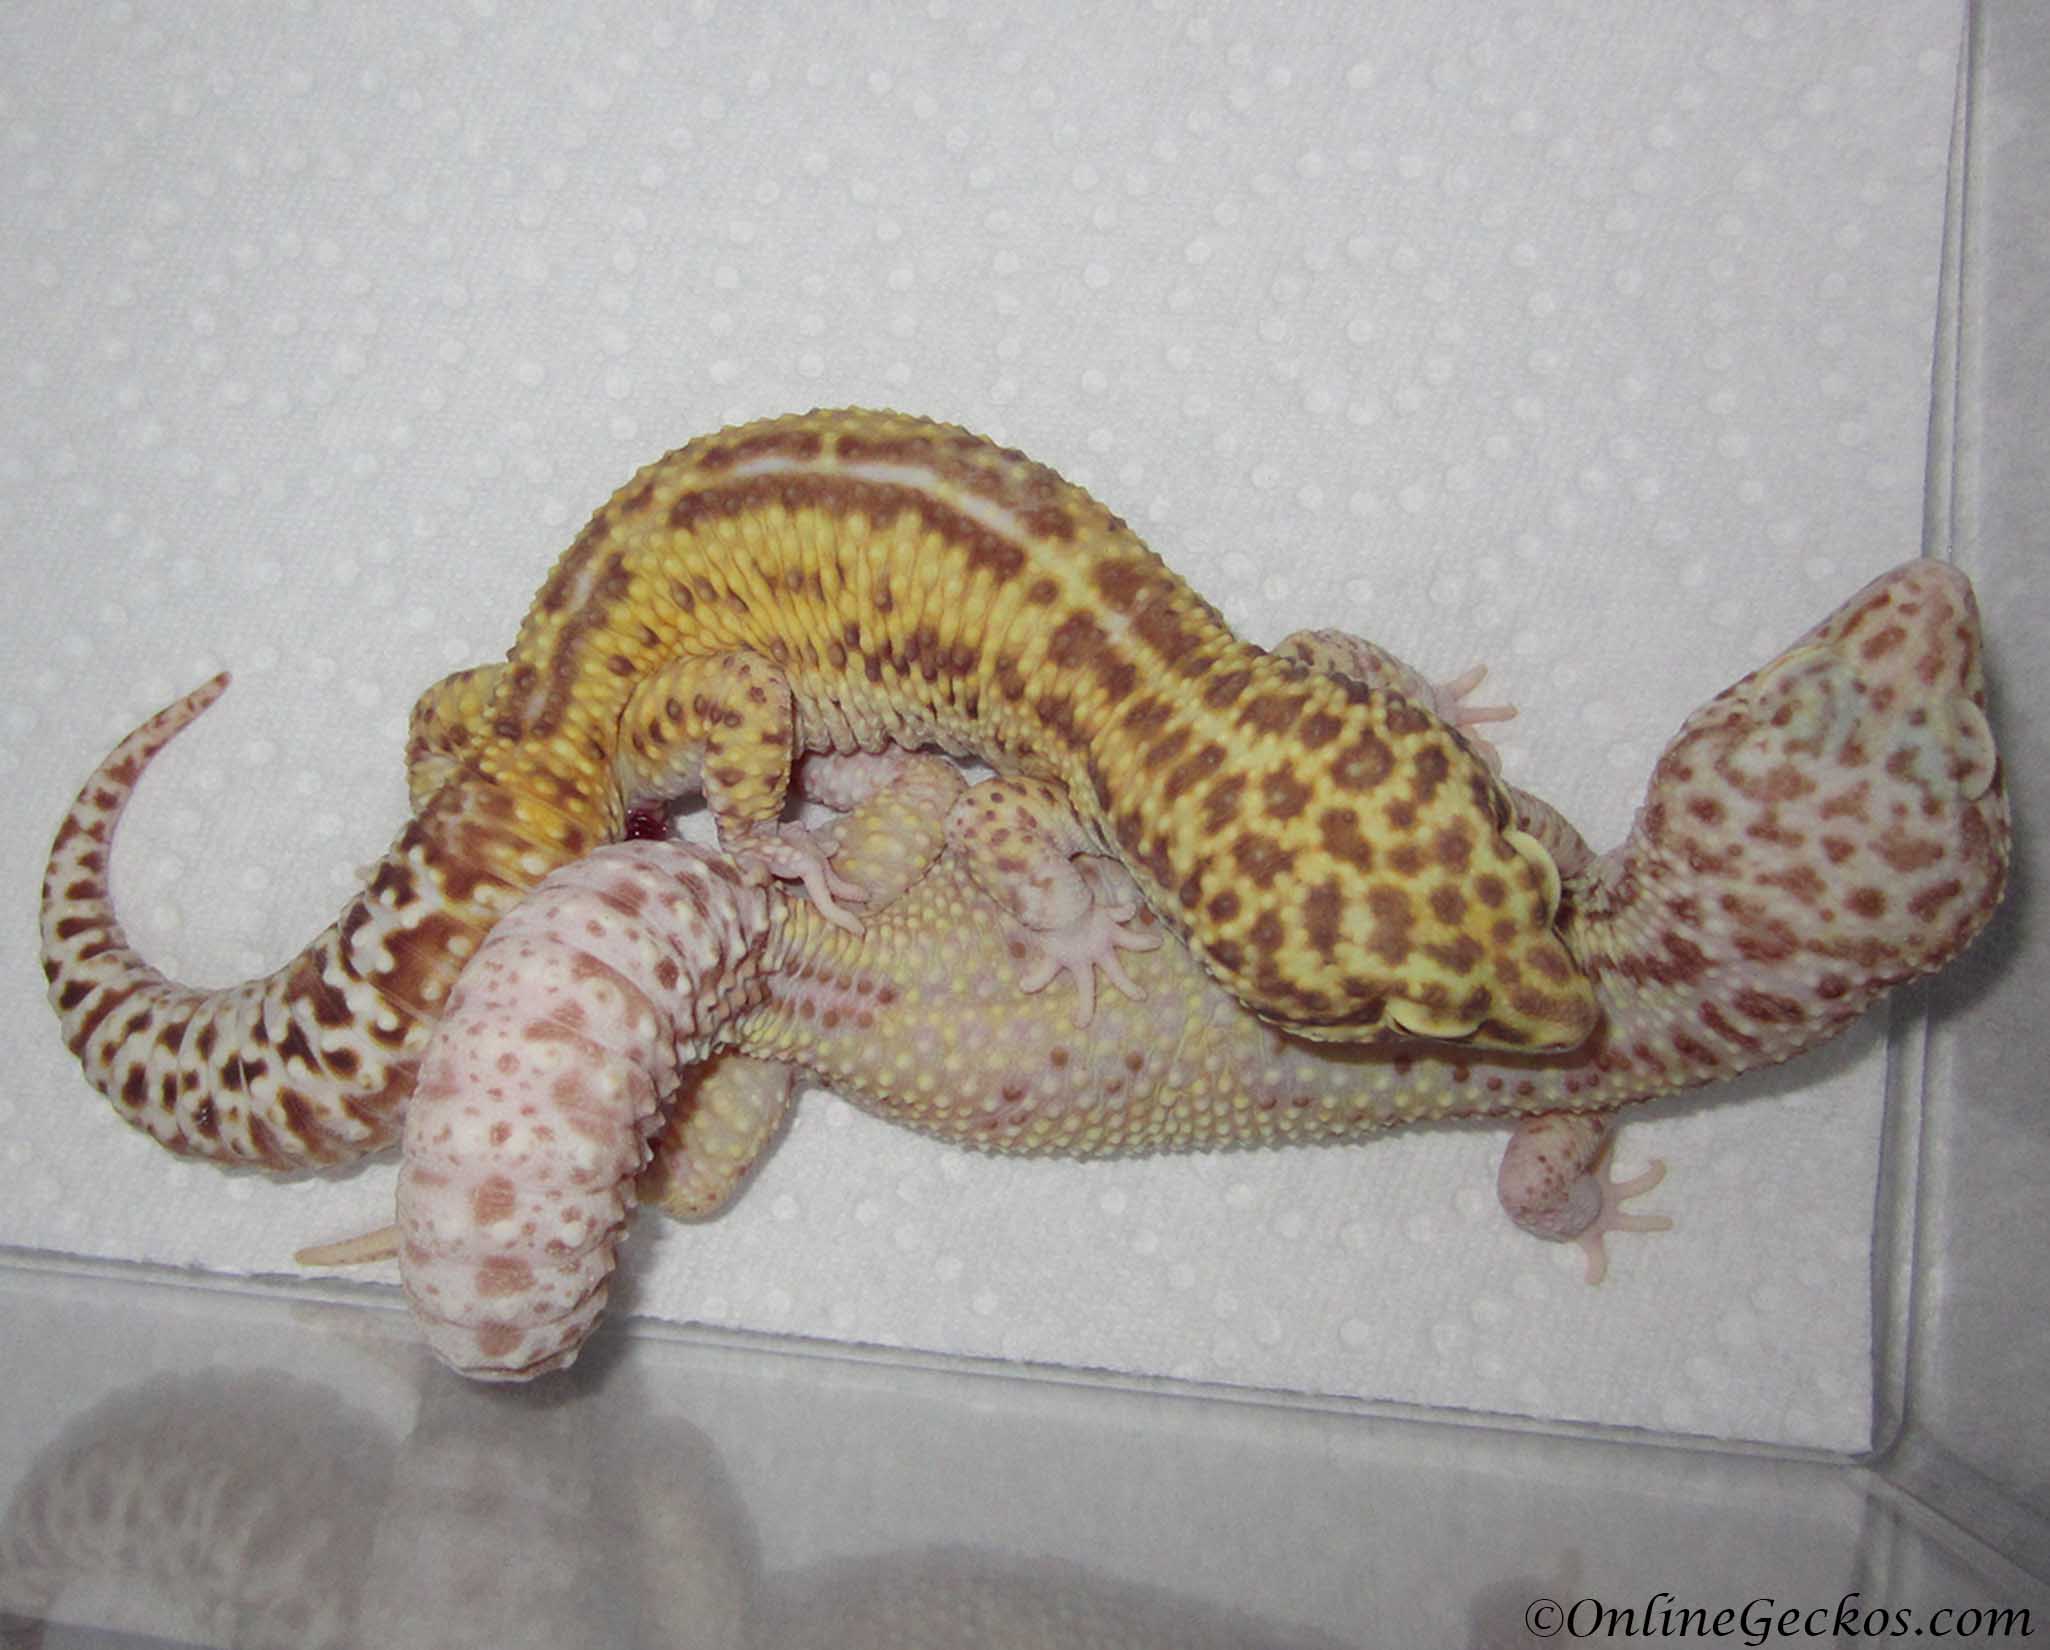 Leopard Gecko Won't Breed - OnlineGeckos.com Gecko Breeder